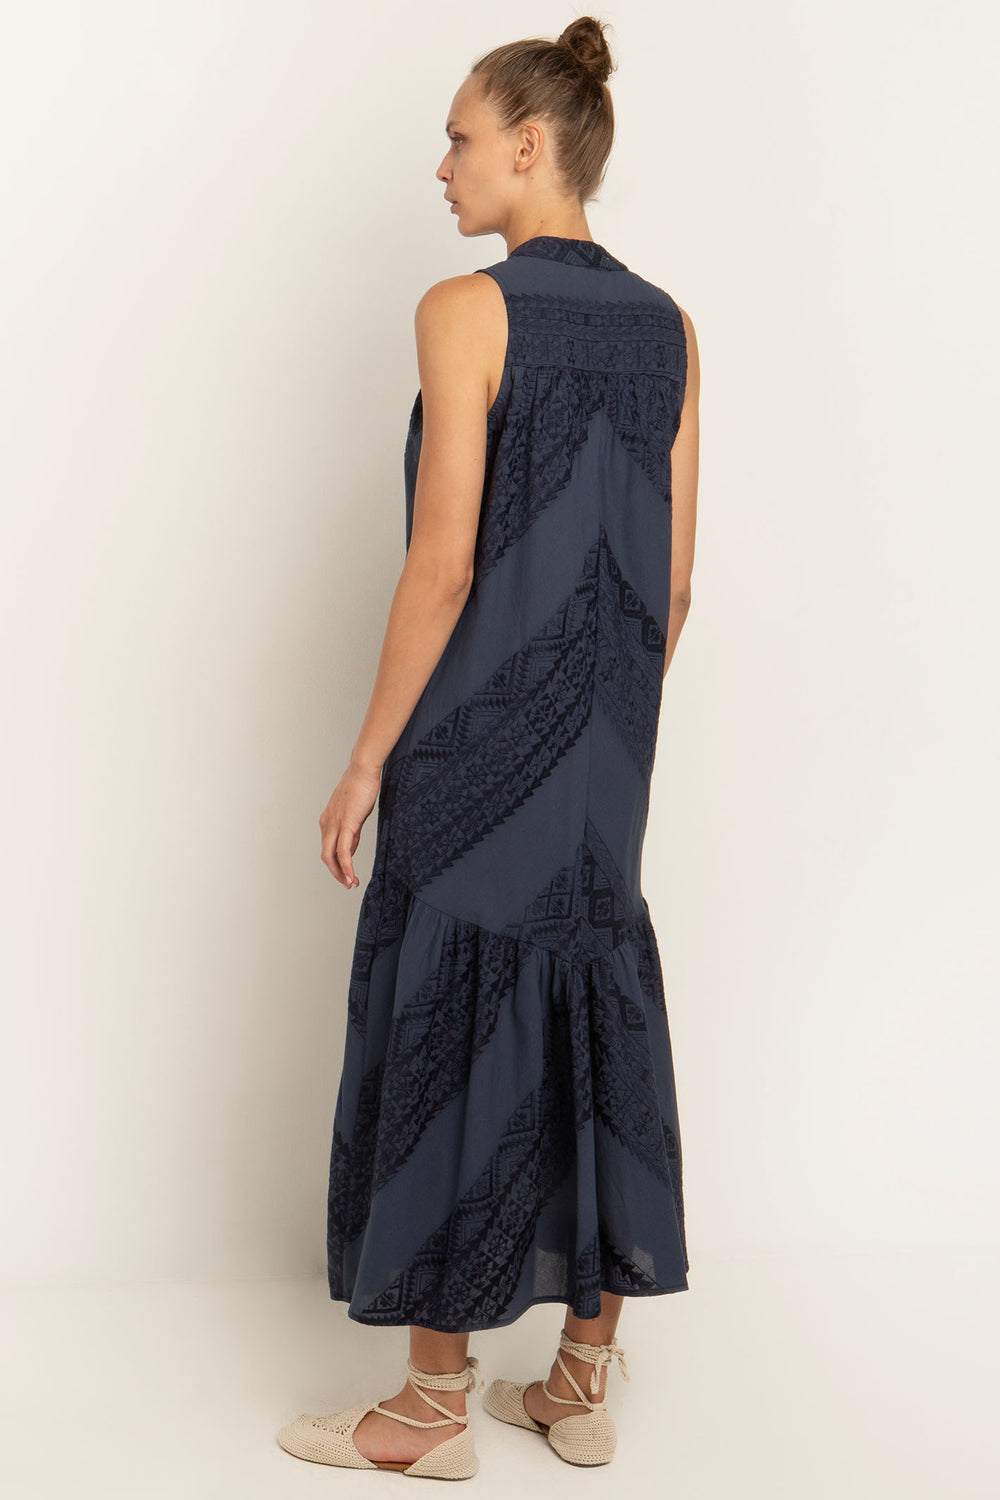 Greek Archaic Kori 330242 Navy Blue Sleeveless Cotton Dress - Olivia Grace Fashion